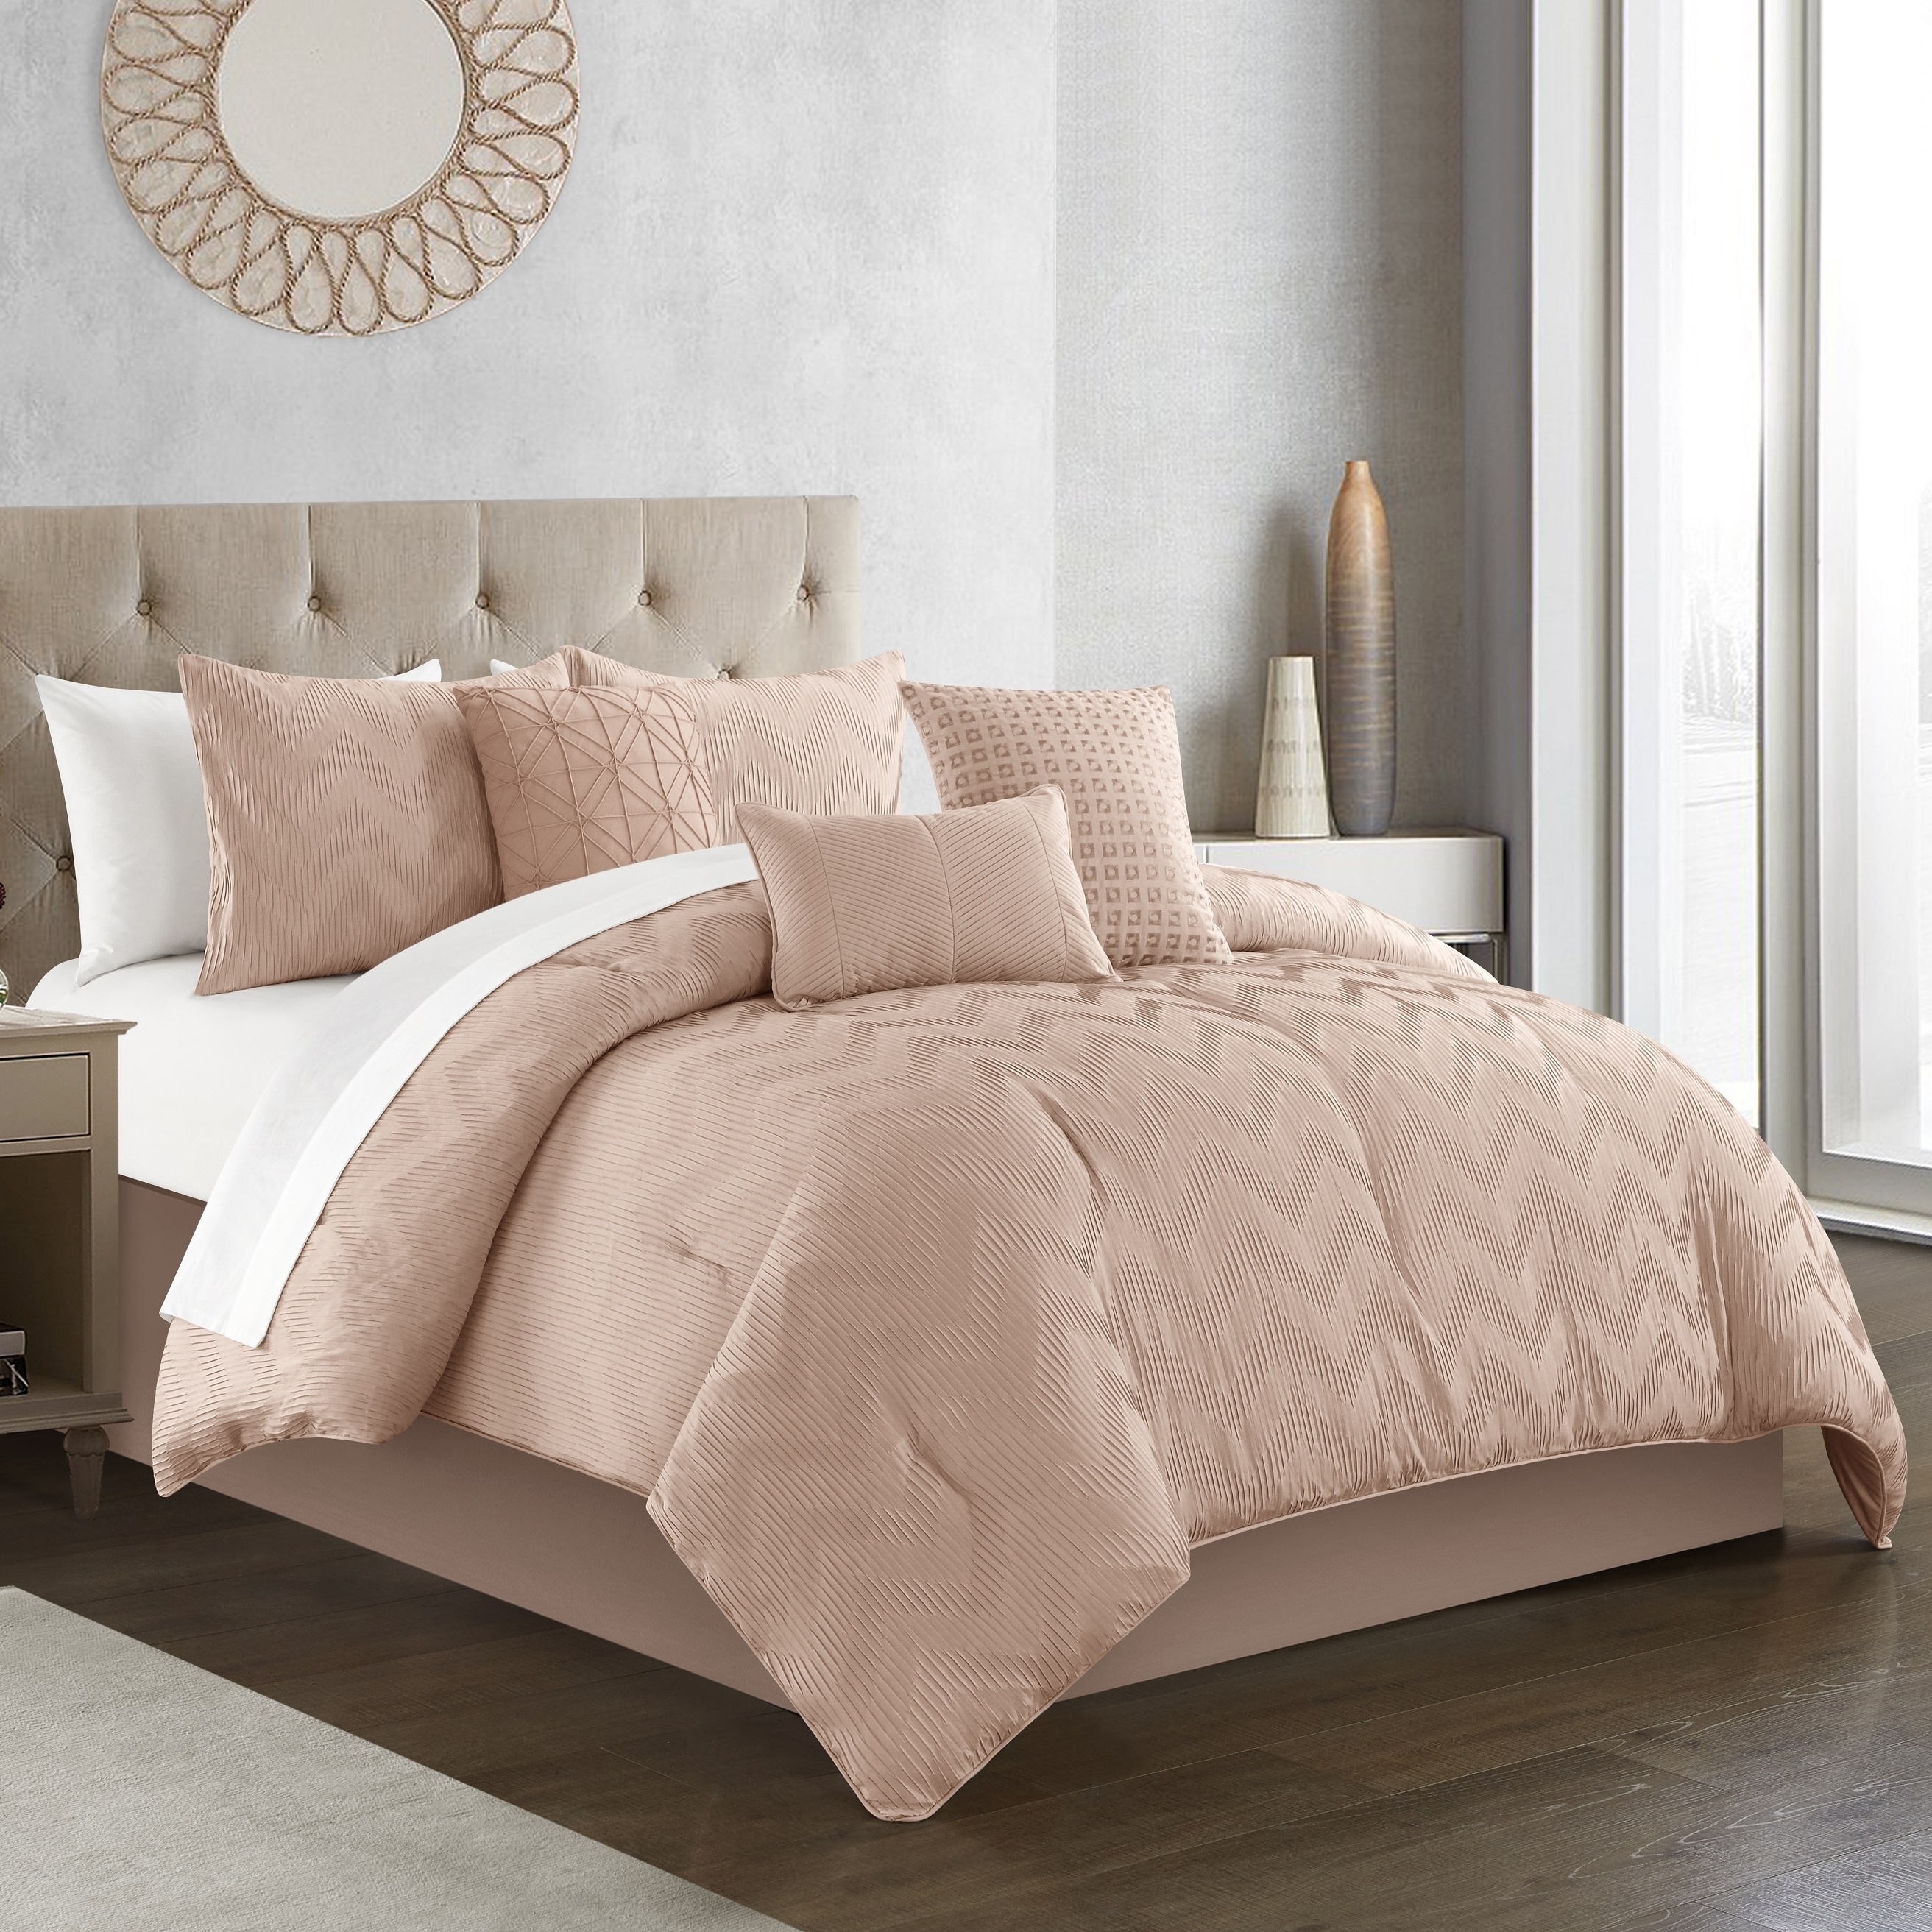 Natalia 6 Piece Comforter Set Plush Ribbed Chevron Design Bedding - Decorative Pillows Shams Included - Beige, King